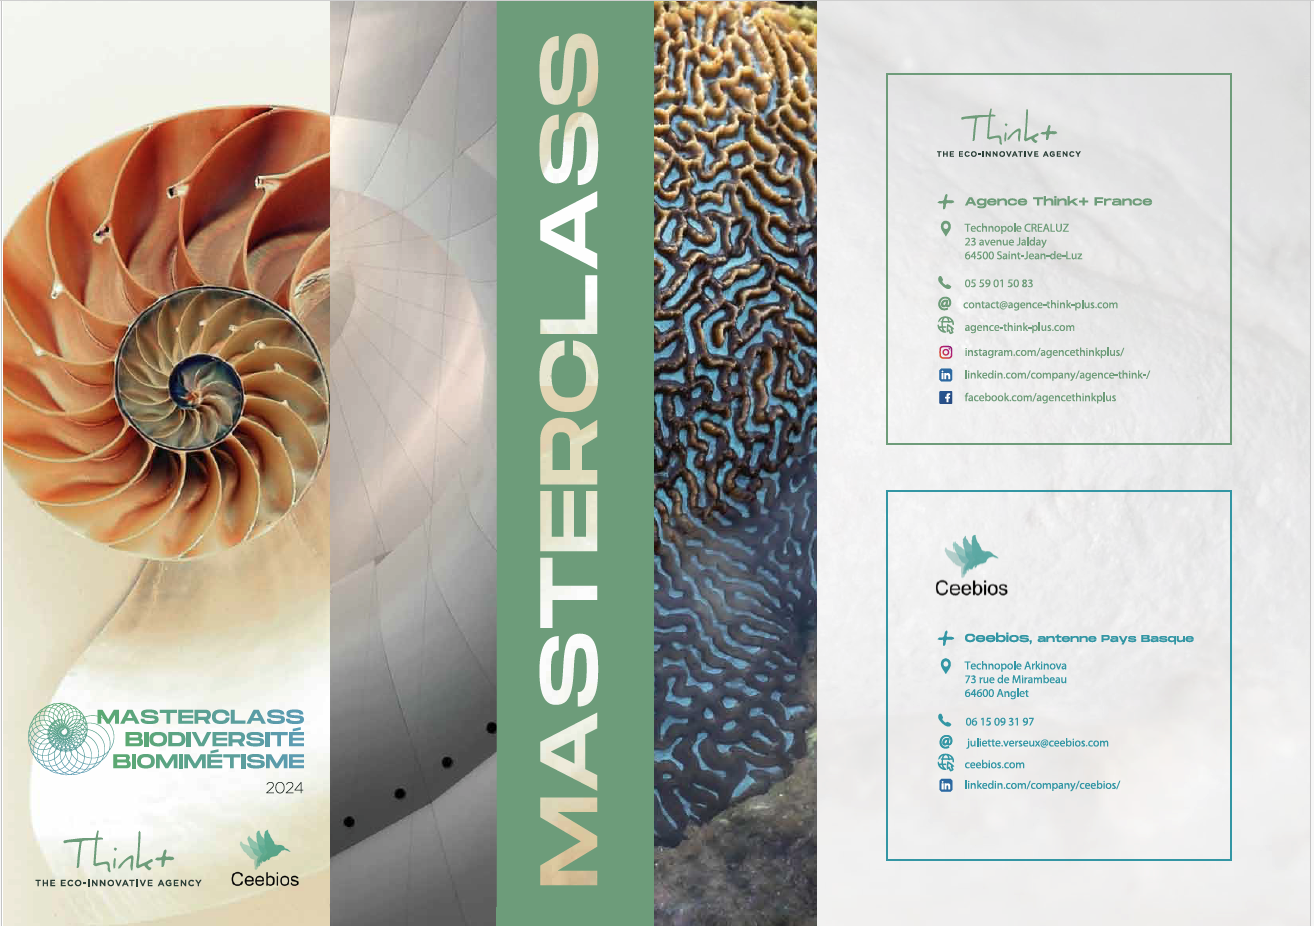 Masterclass Biodiversité & Biomimétisme